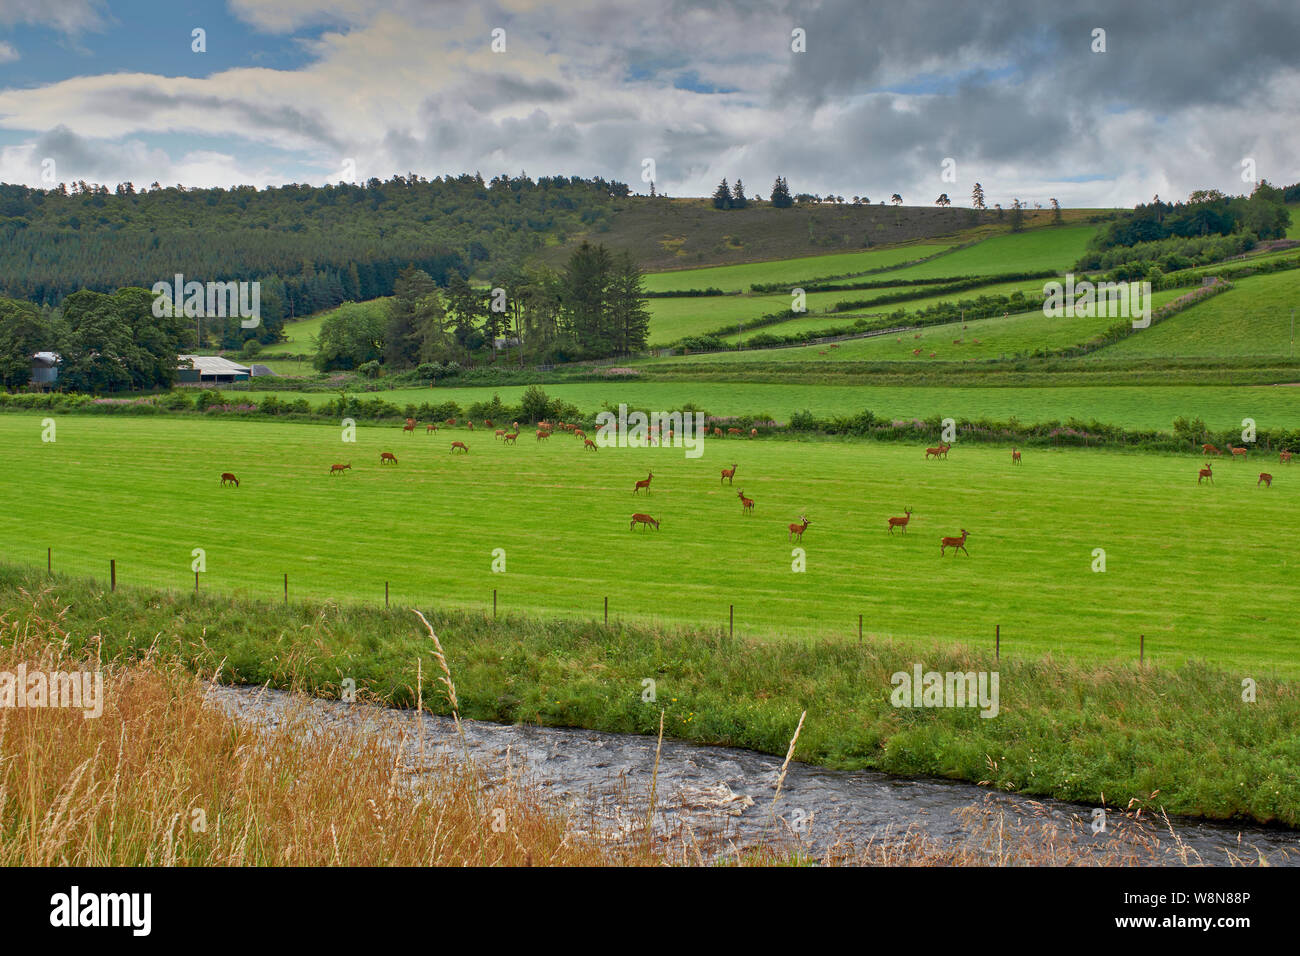 RED DEER FARM GLENKINDIE ABERDEENSHIRE Scozia mandria di cervi di allevamento in campi dal fiume DON Foto Stock